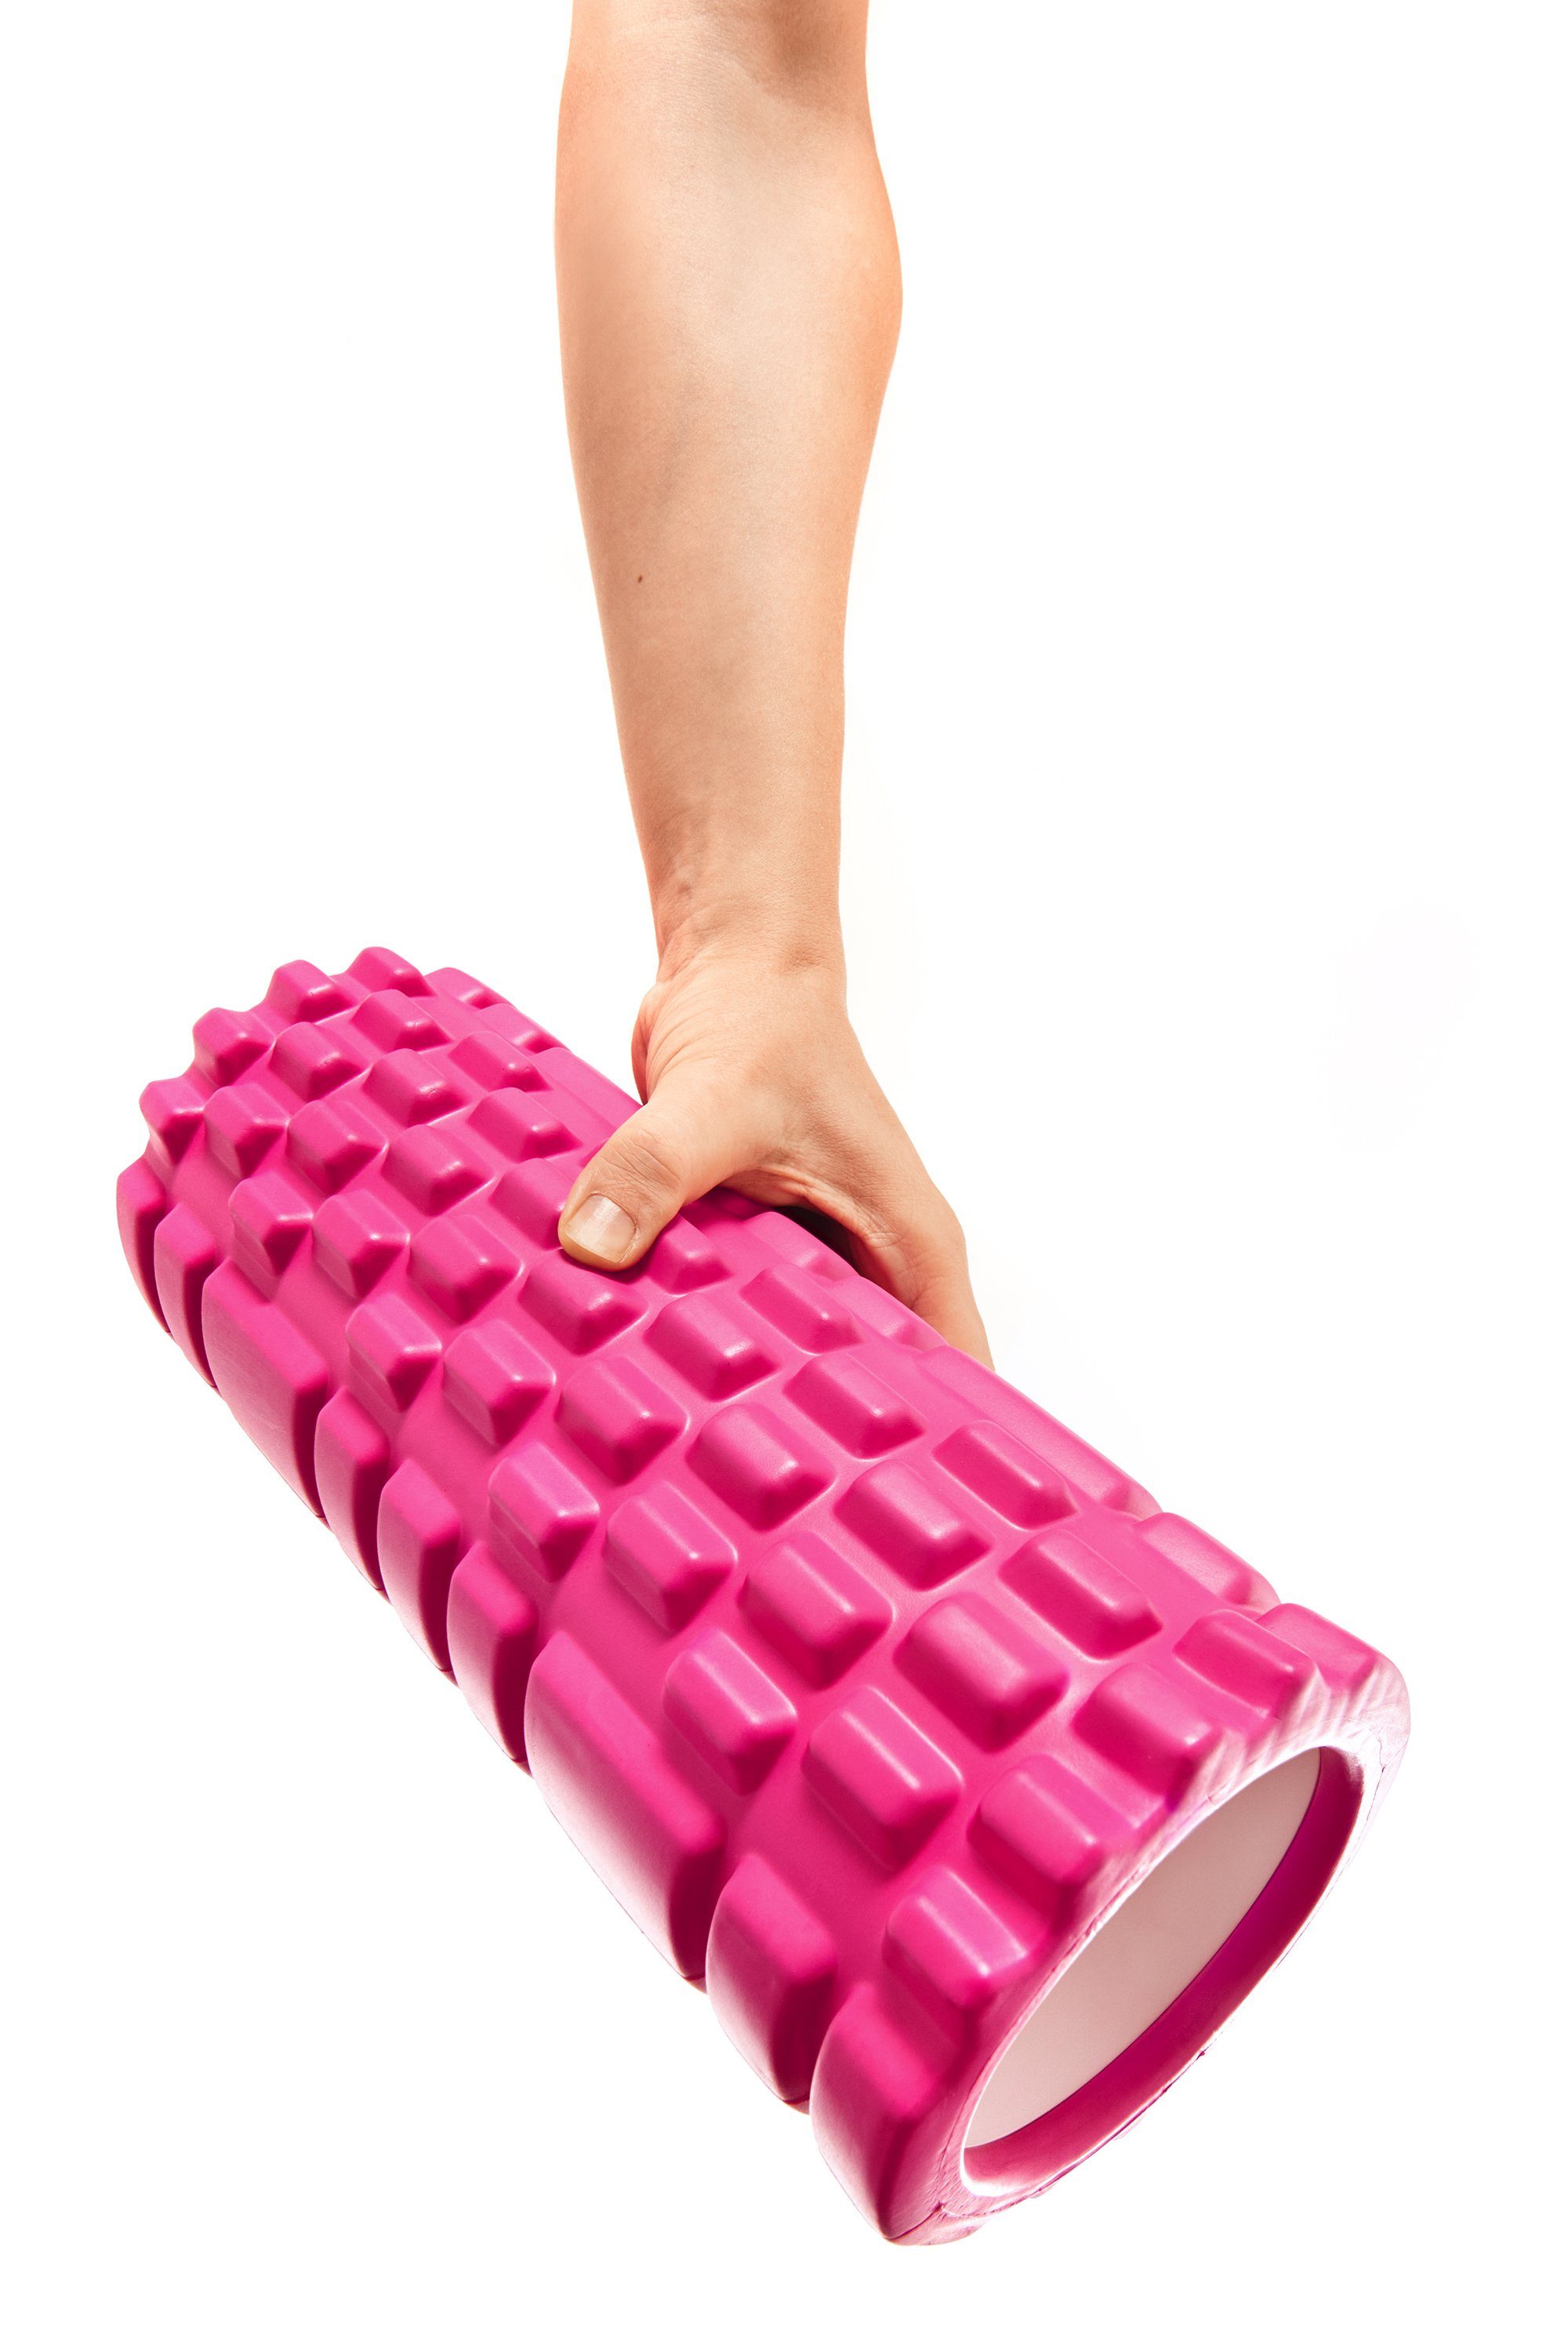 inkl. 34x14cm Faszienrolle Massagerolle Trainingsplan, Fitnessrolle Anasuya pink #DoYourFitness